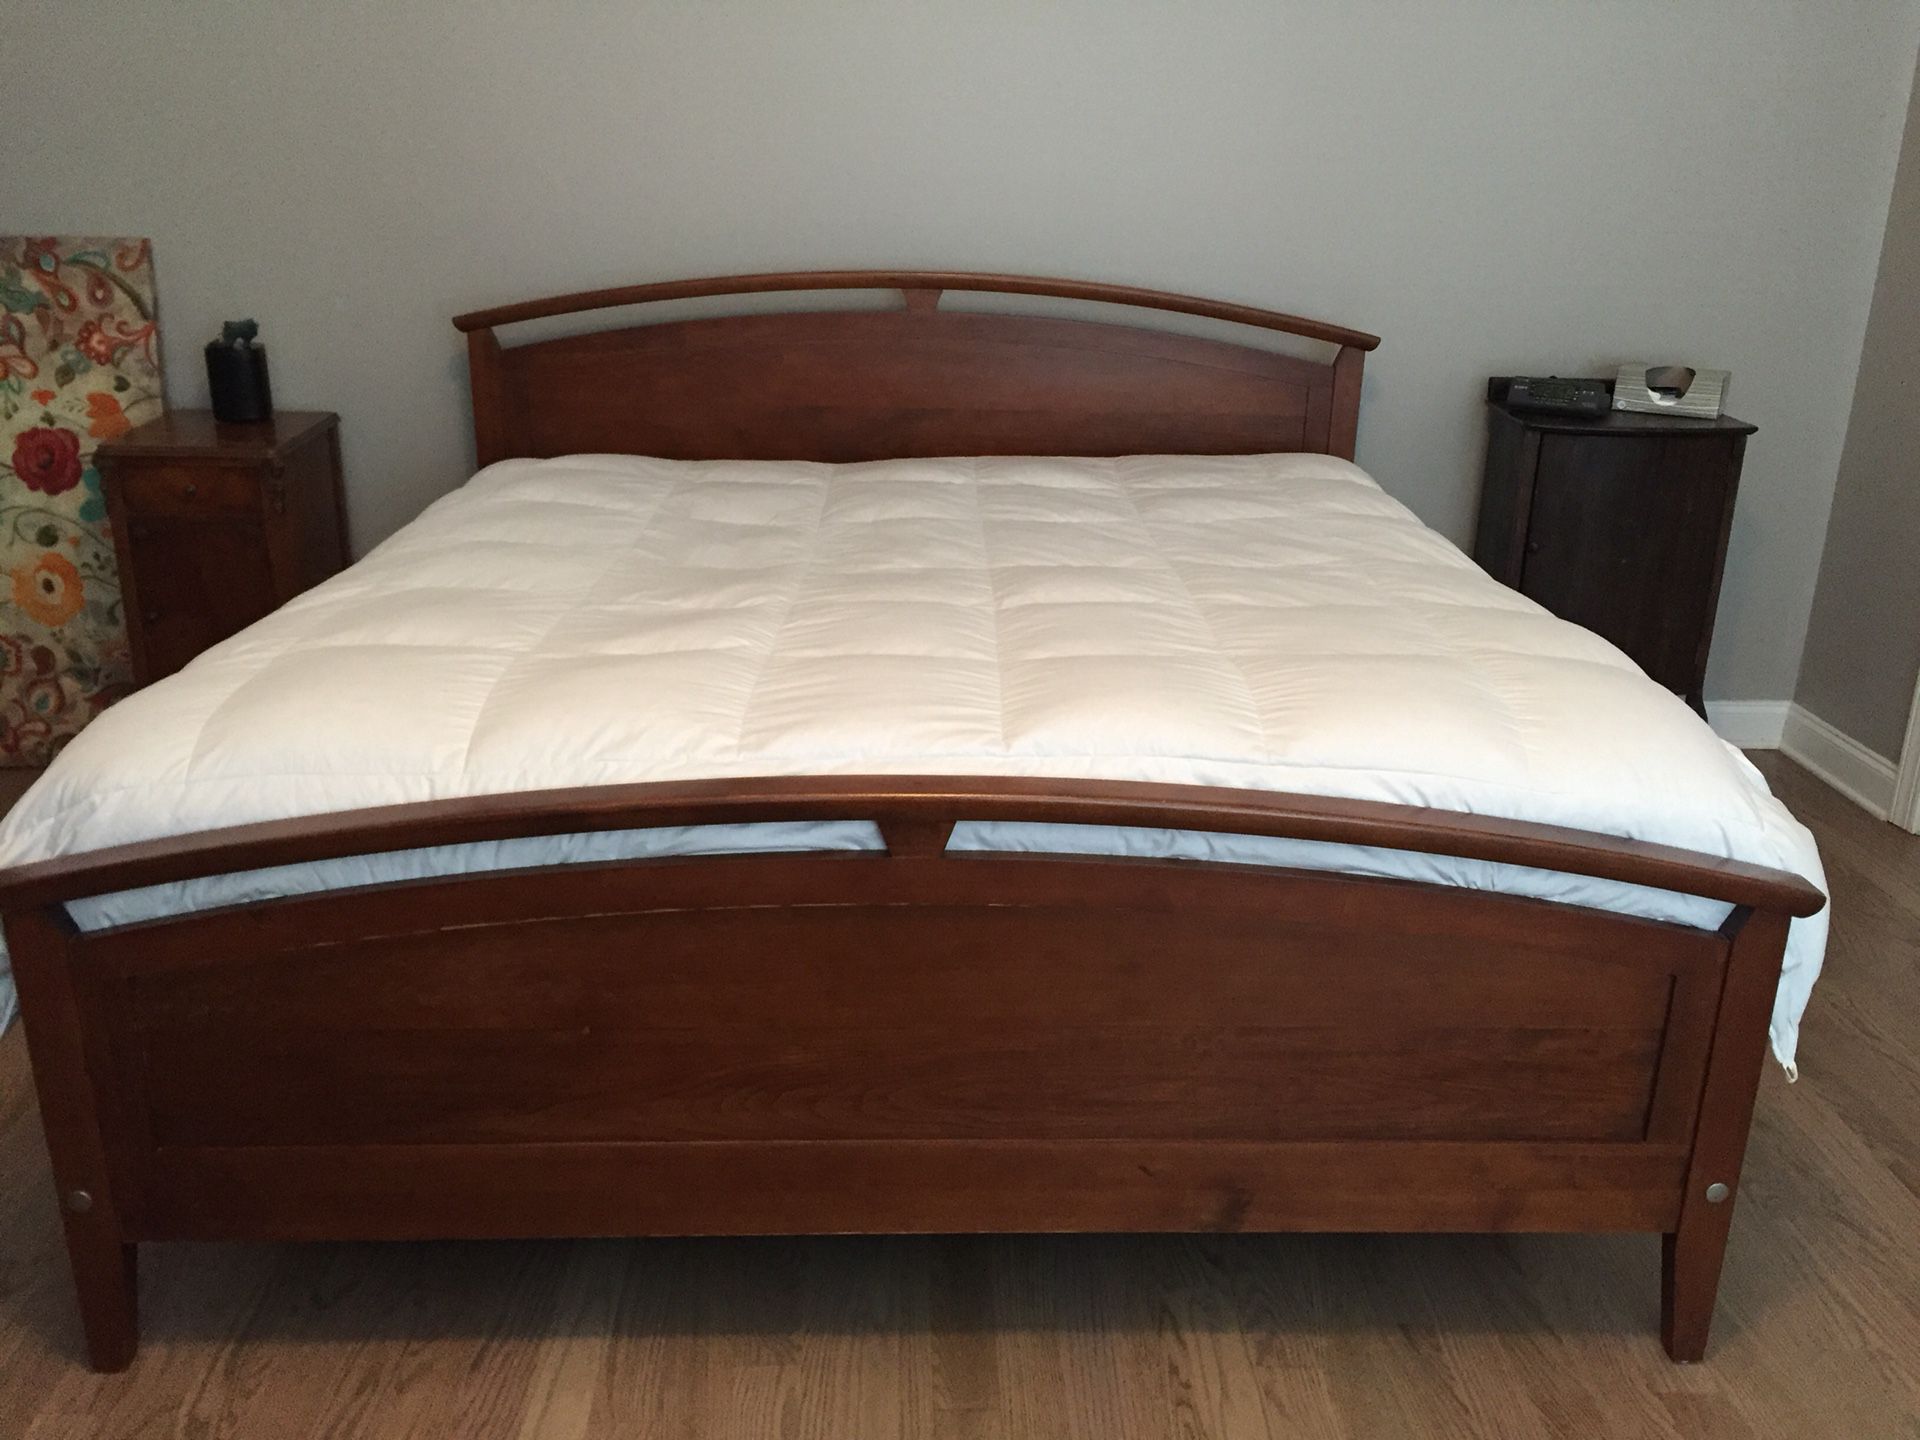 Ethan Allen King Size Bed Frame For, Ethan Allen King Size Bed Frame